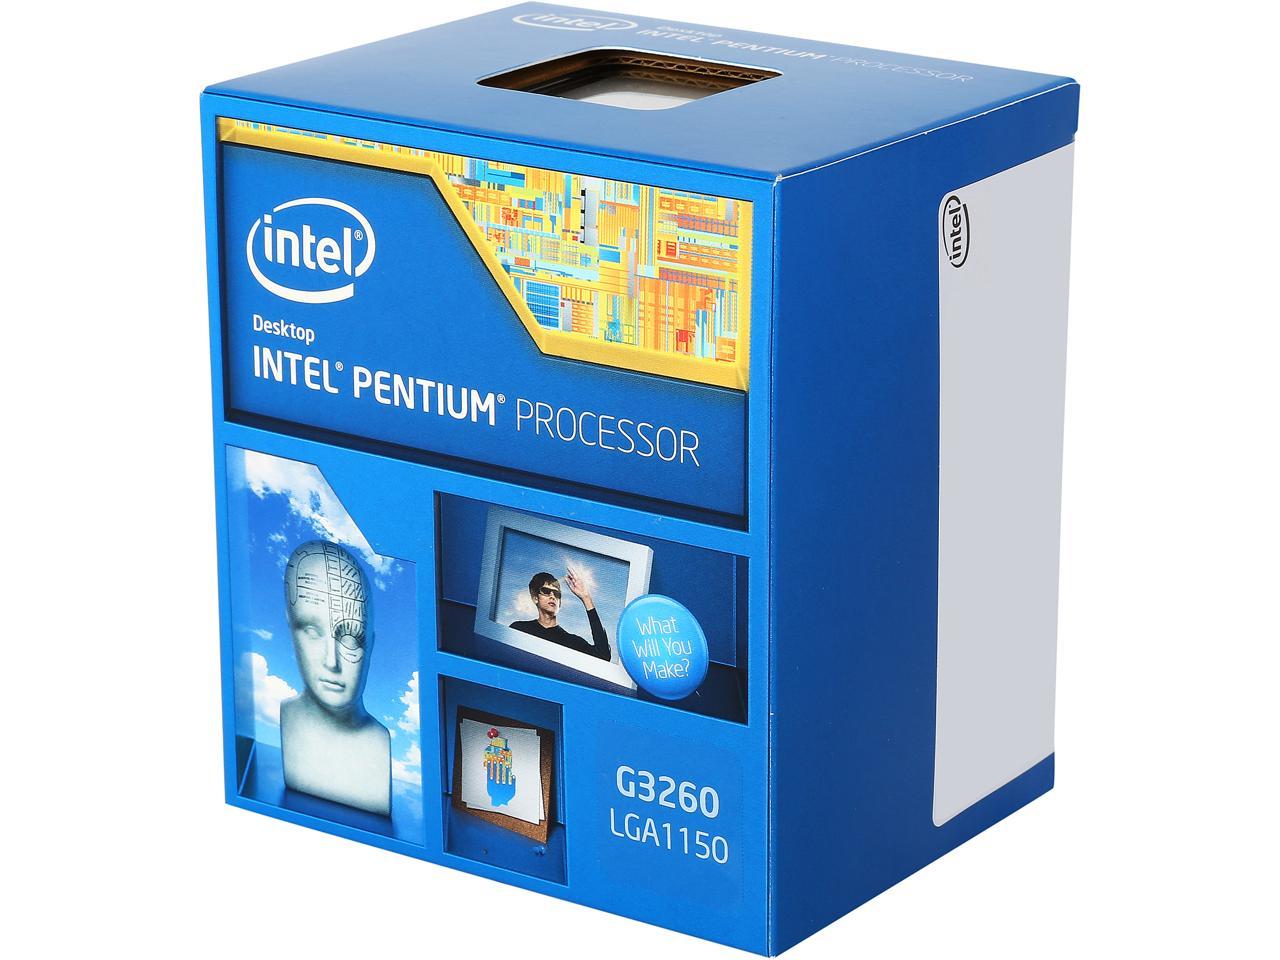 Intel Pentium G3260 Haswell Dual-Core 3.3 GHz LGA 1150 BX80646G3260 Desktop Processor